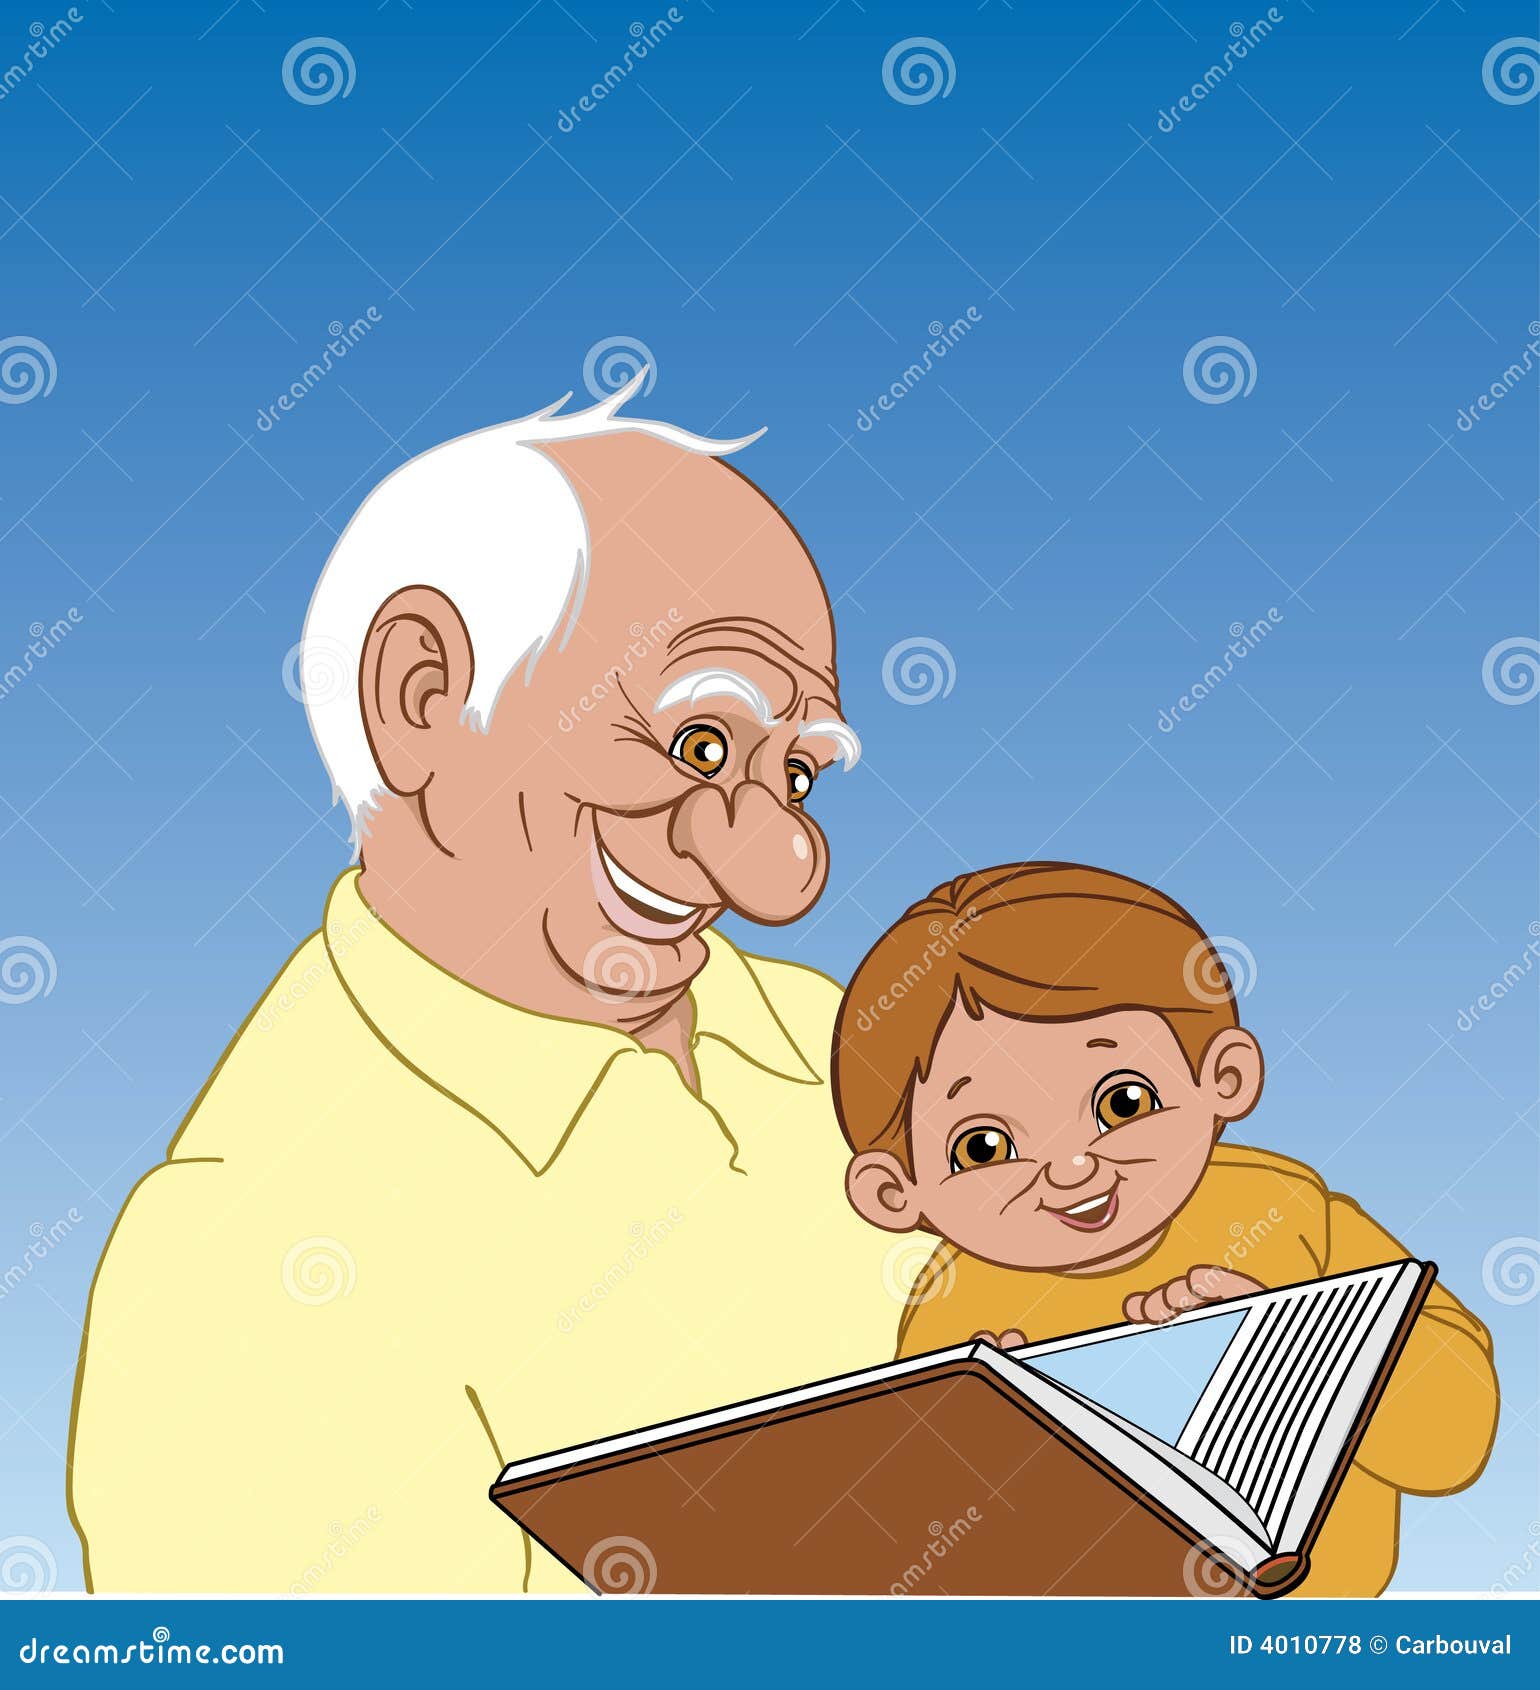 Про дедушек и пап. Дедушка и внук. Дедушка и внук рисунок. Дедушка с внучками иллюстрация. Детям о дедушке.